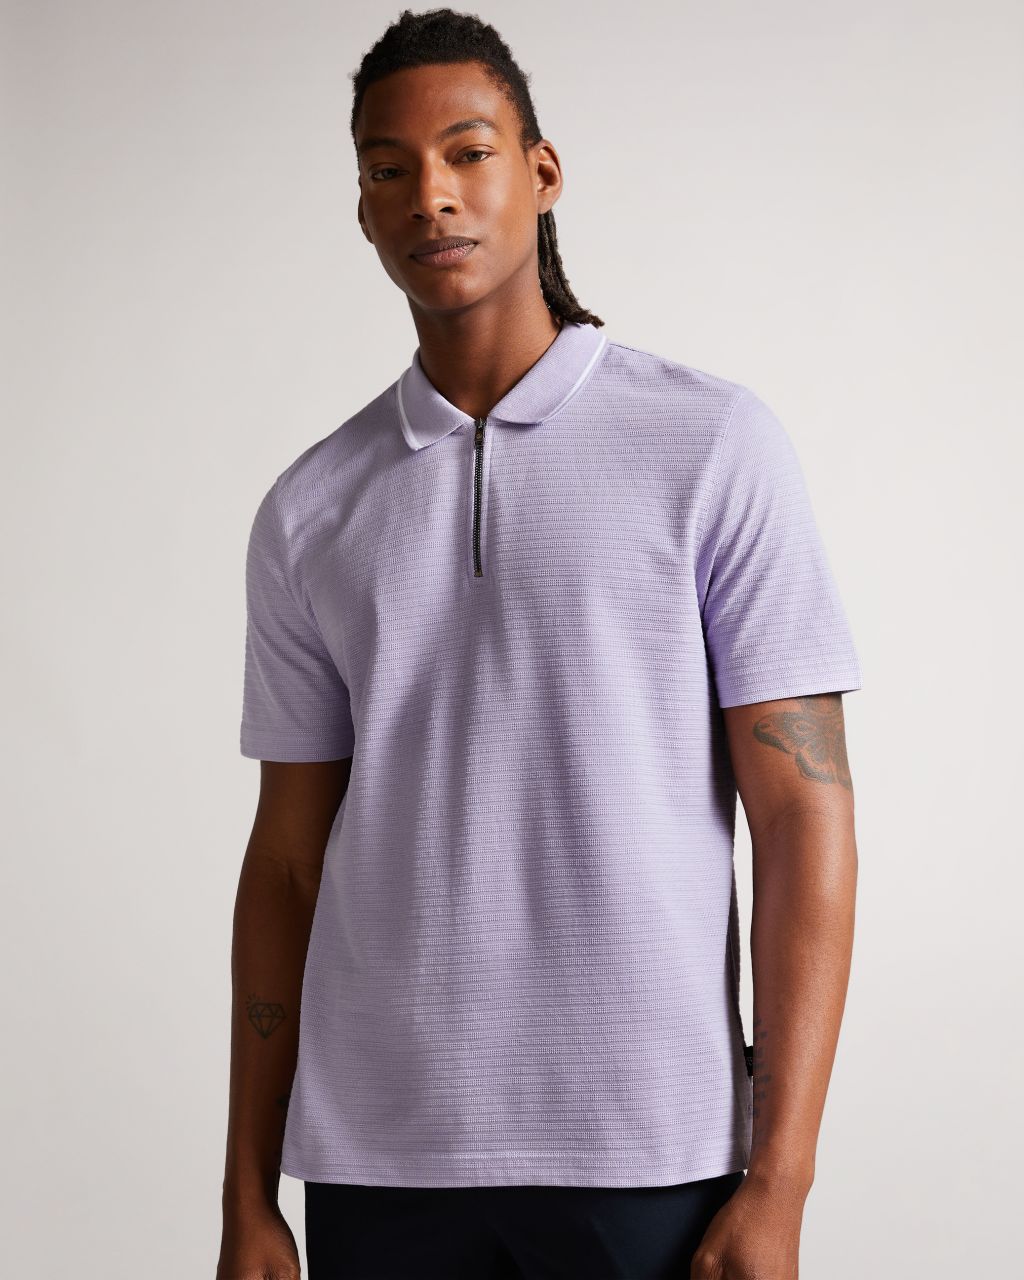 Ted Baker Men's Short Sleeve Textured Zip Polo Shirt in Light Purple, Buer, Cotton